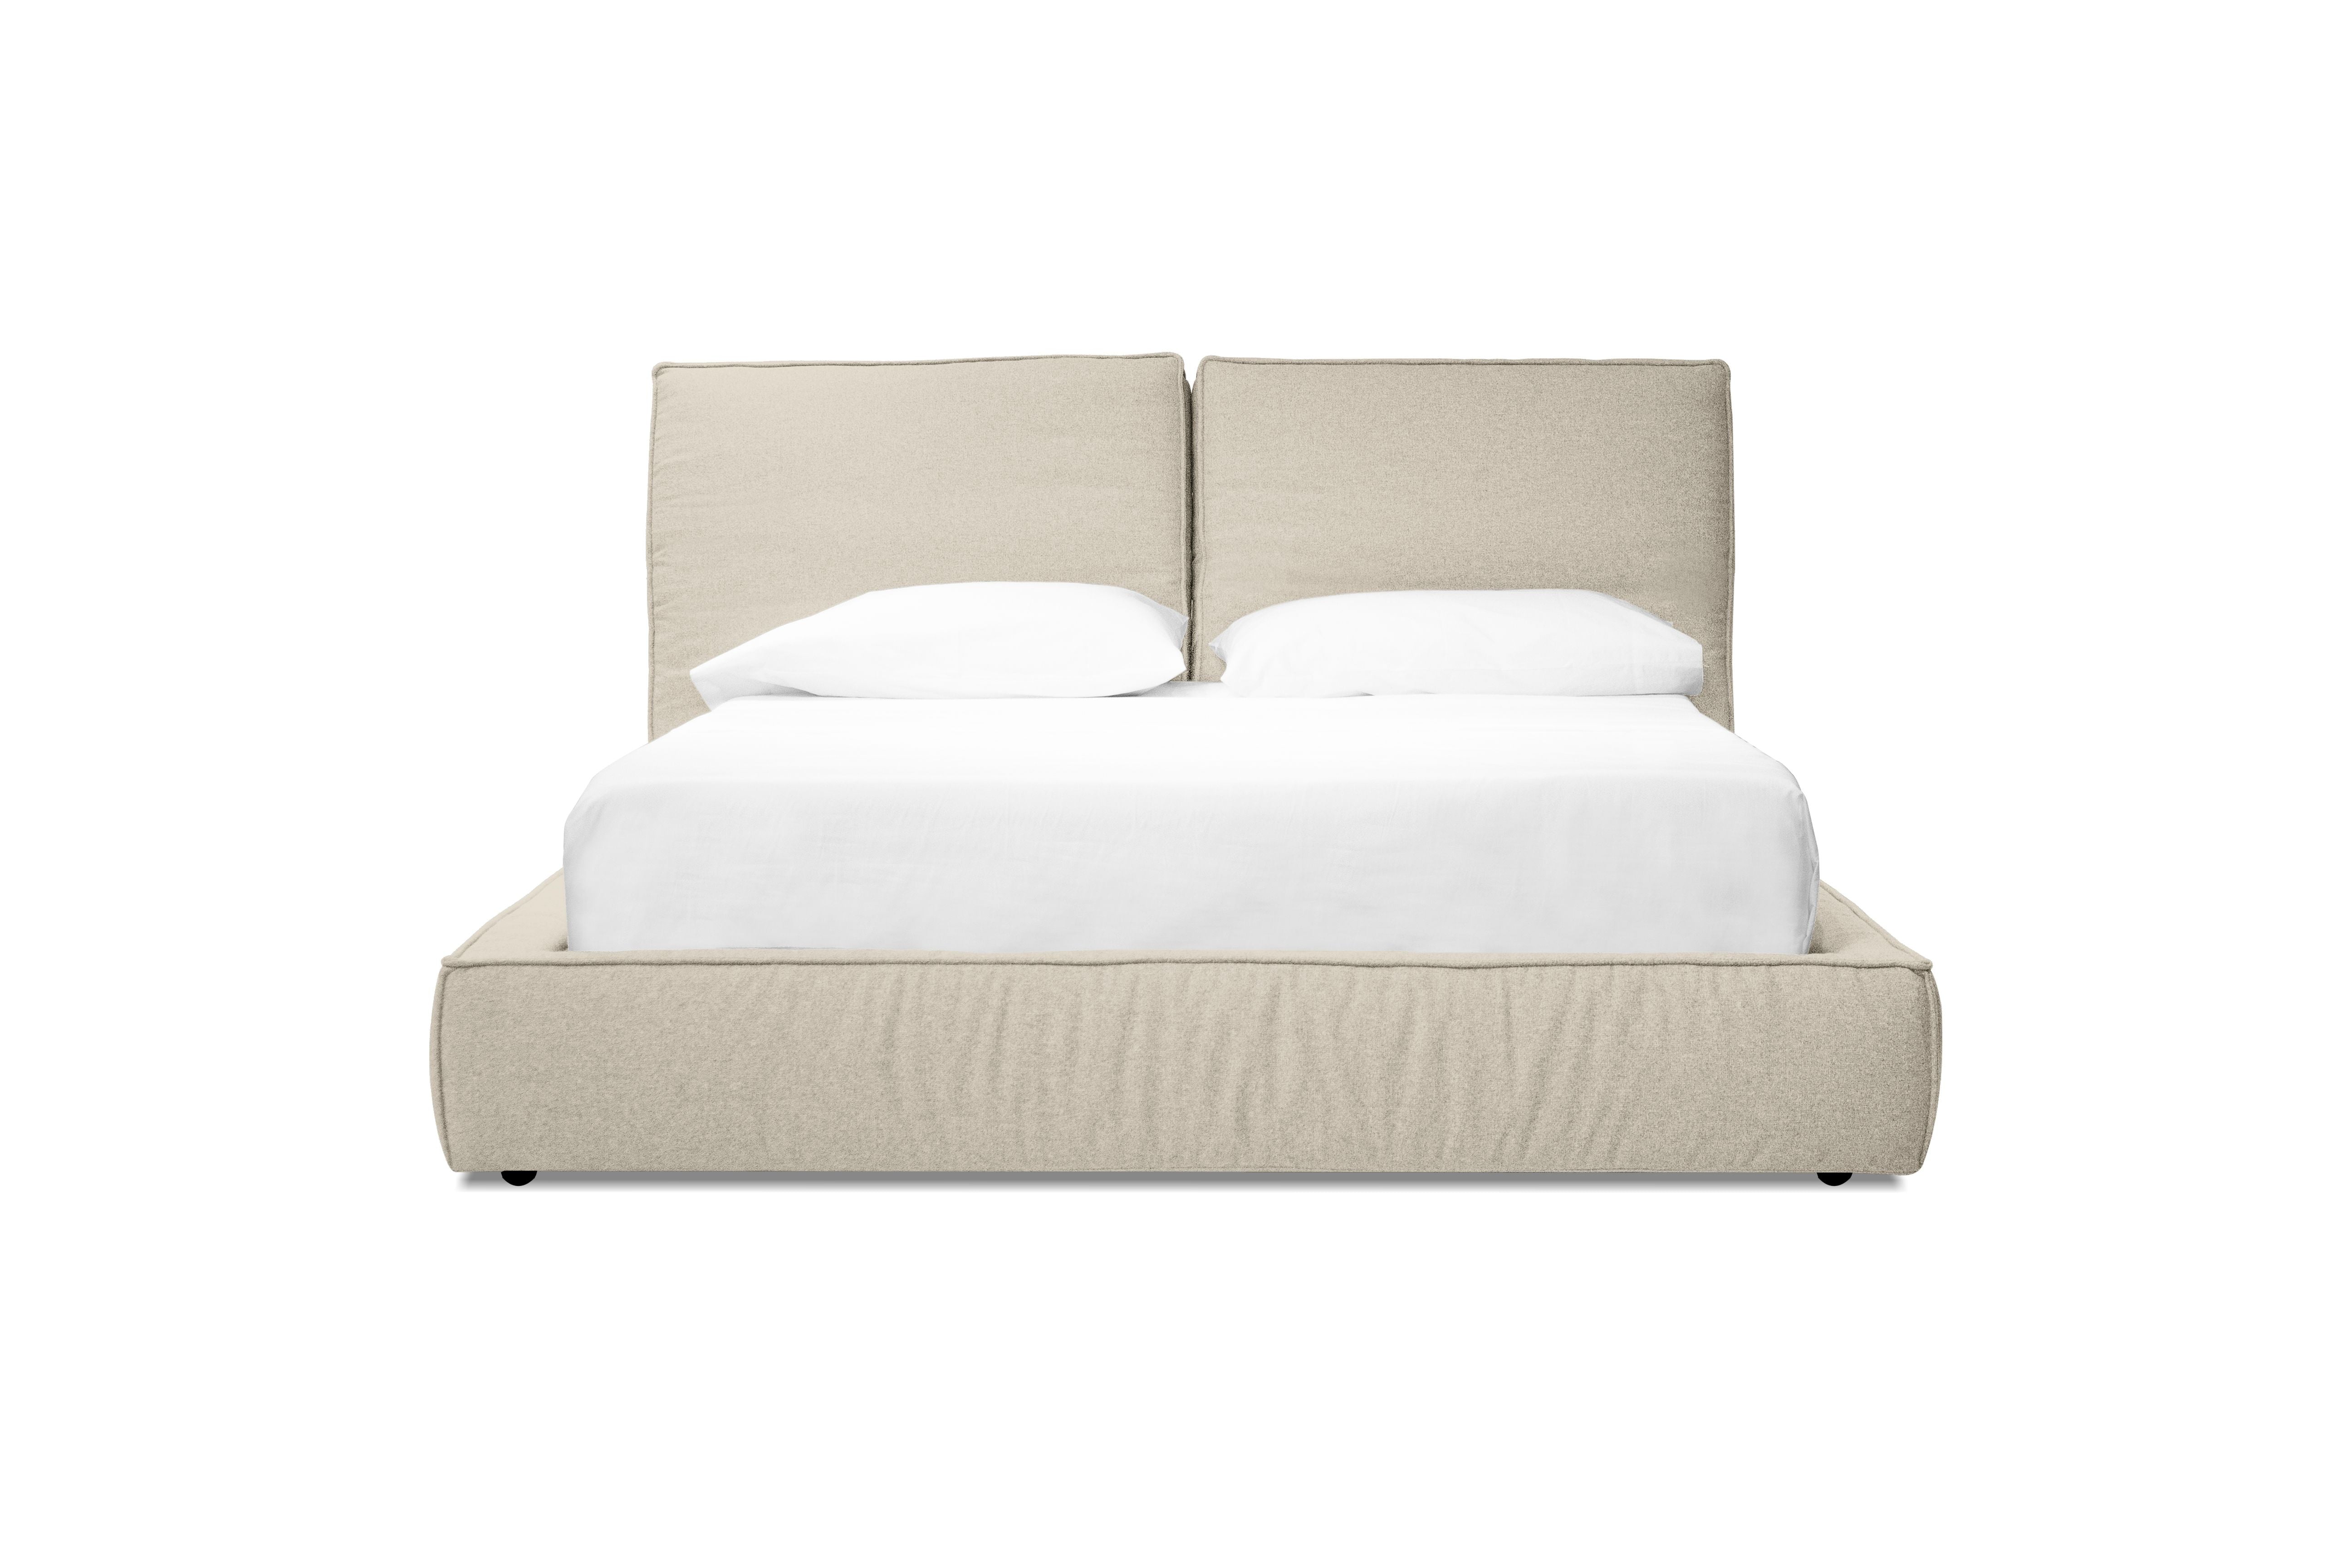 BENDO Bed in Almond Linen